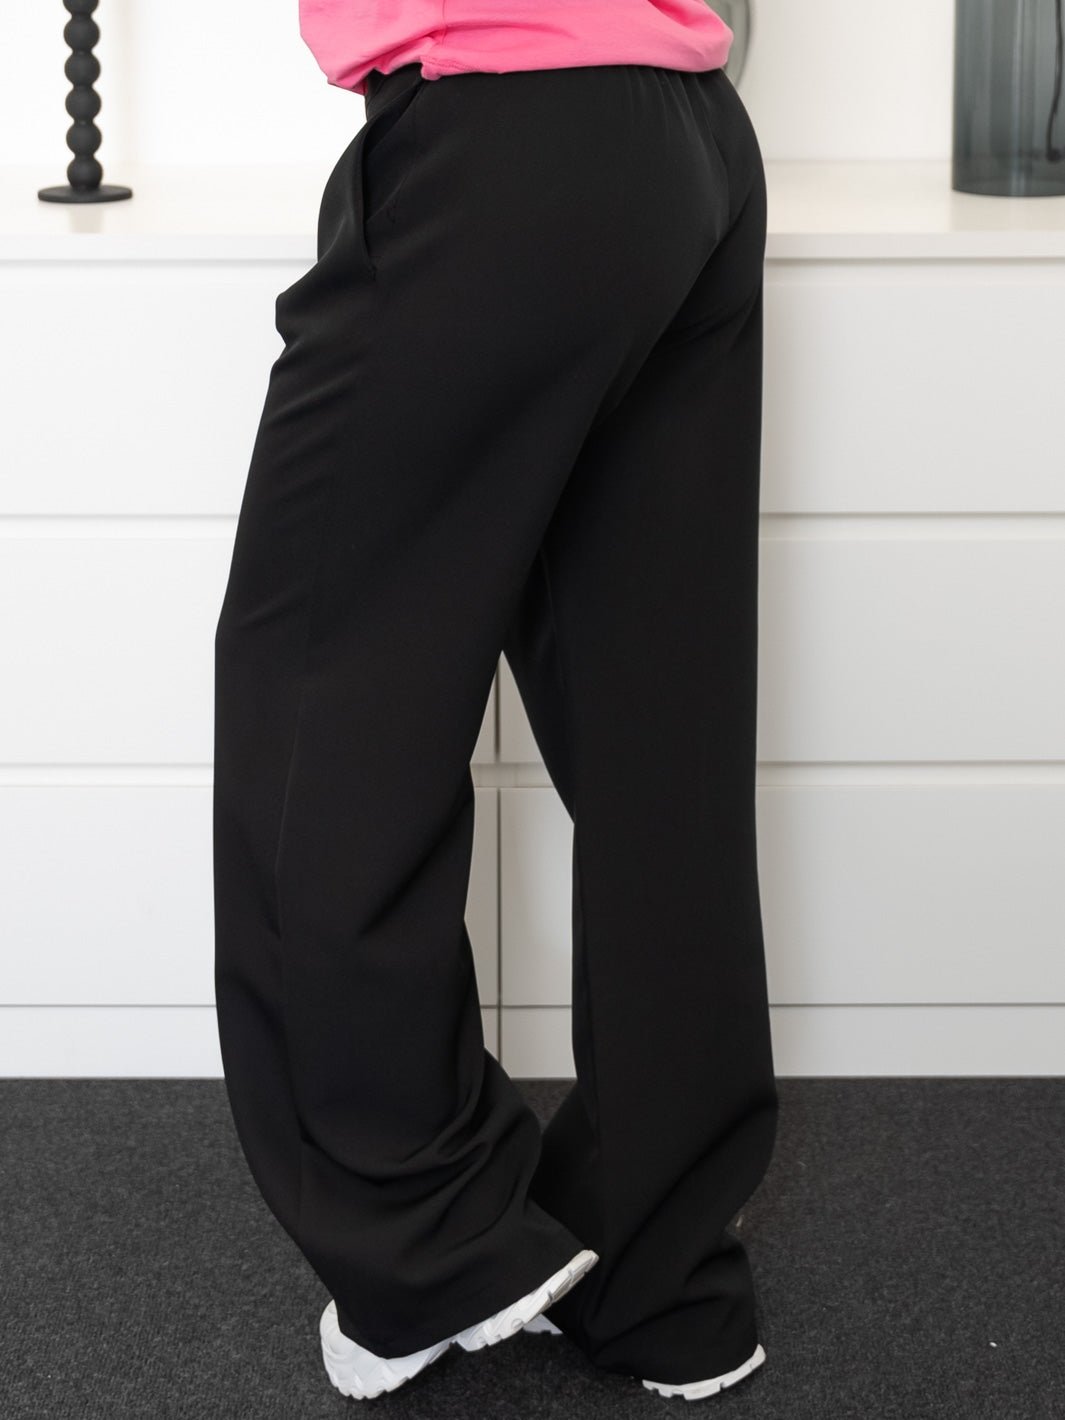 All Week Canja wide pants black - Online-Mode